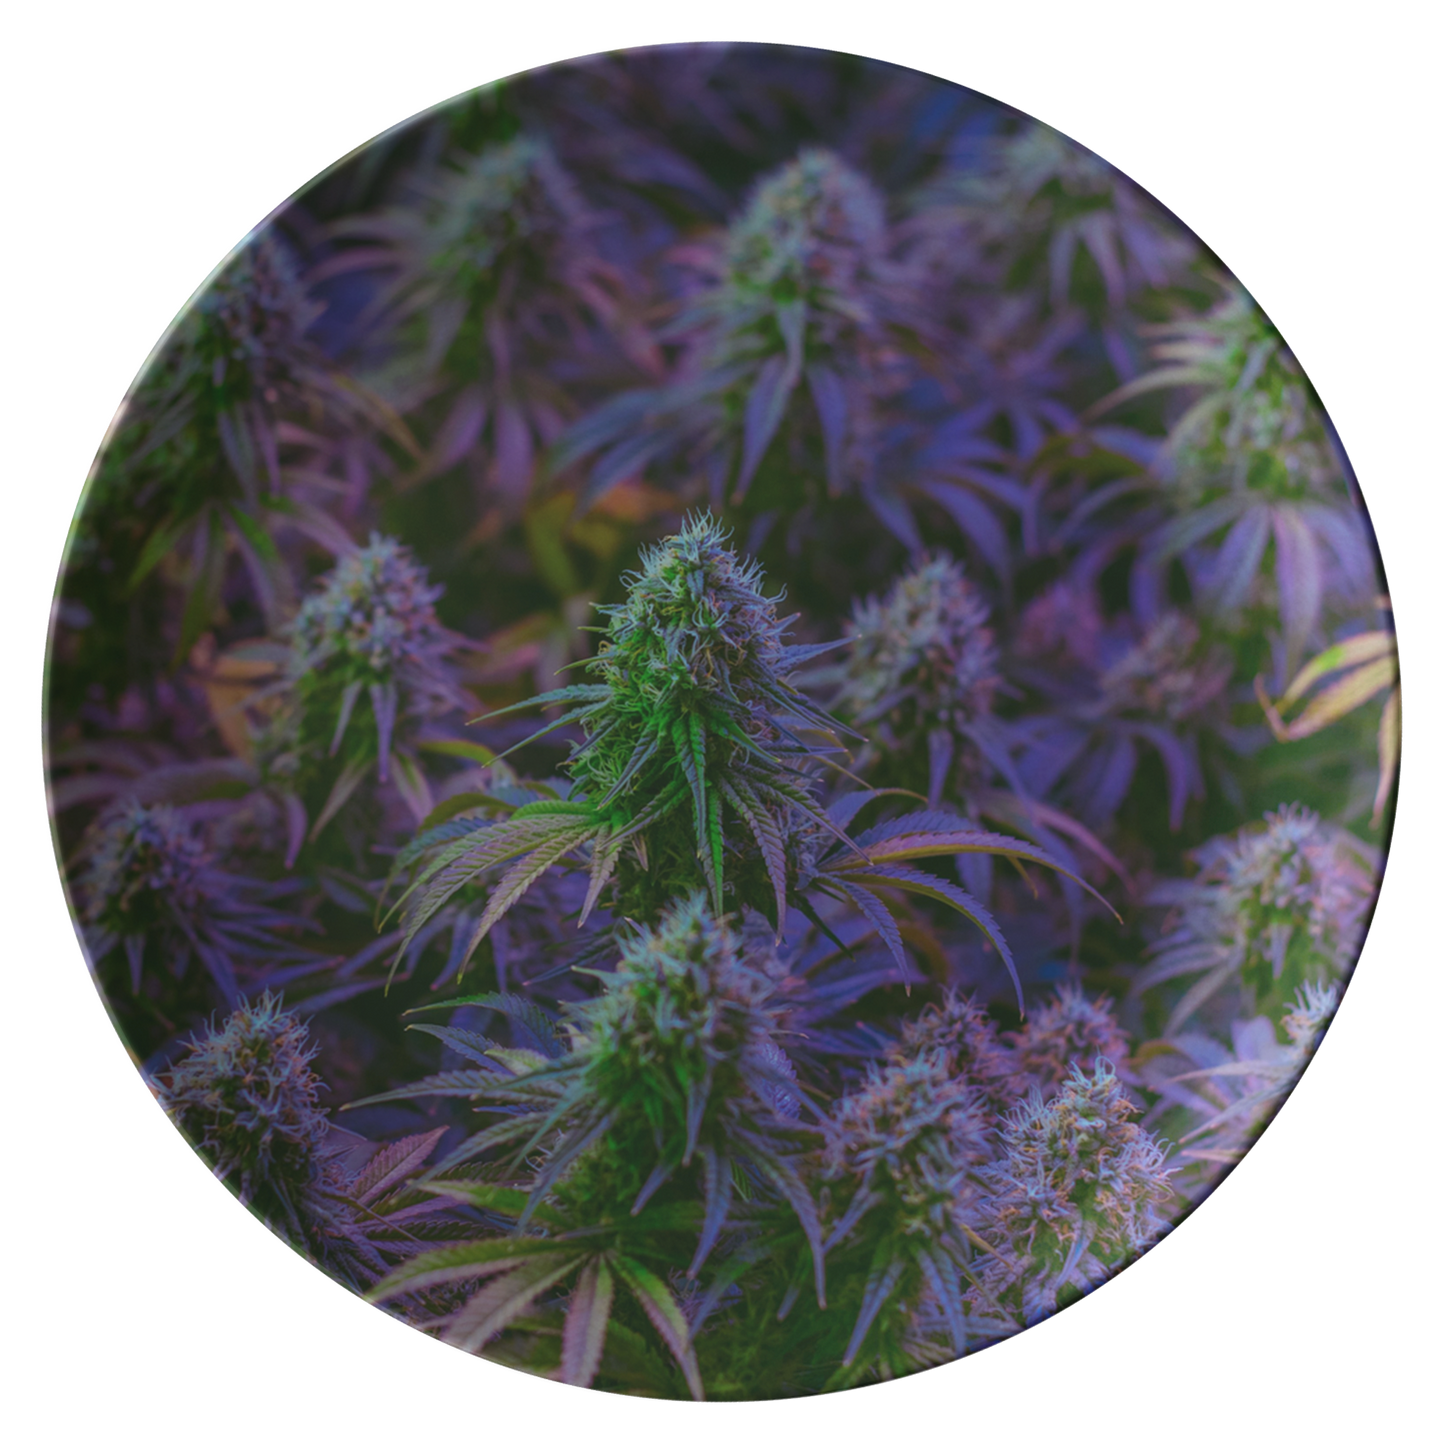 The Purple Cannabis Plate